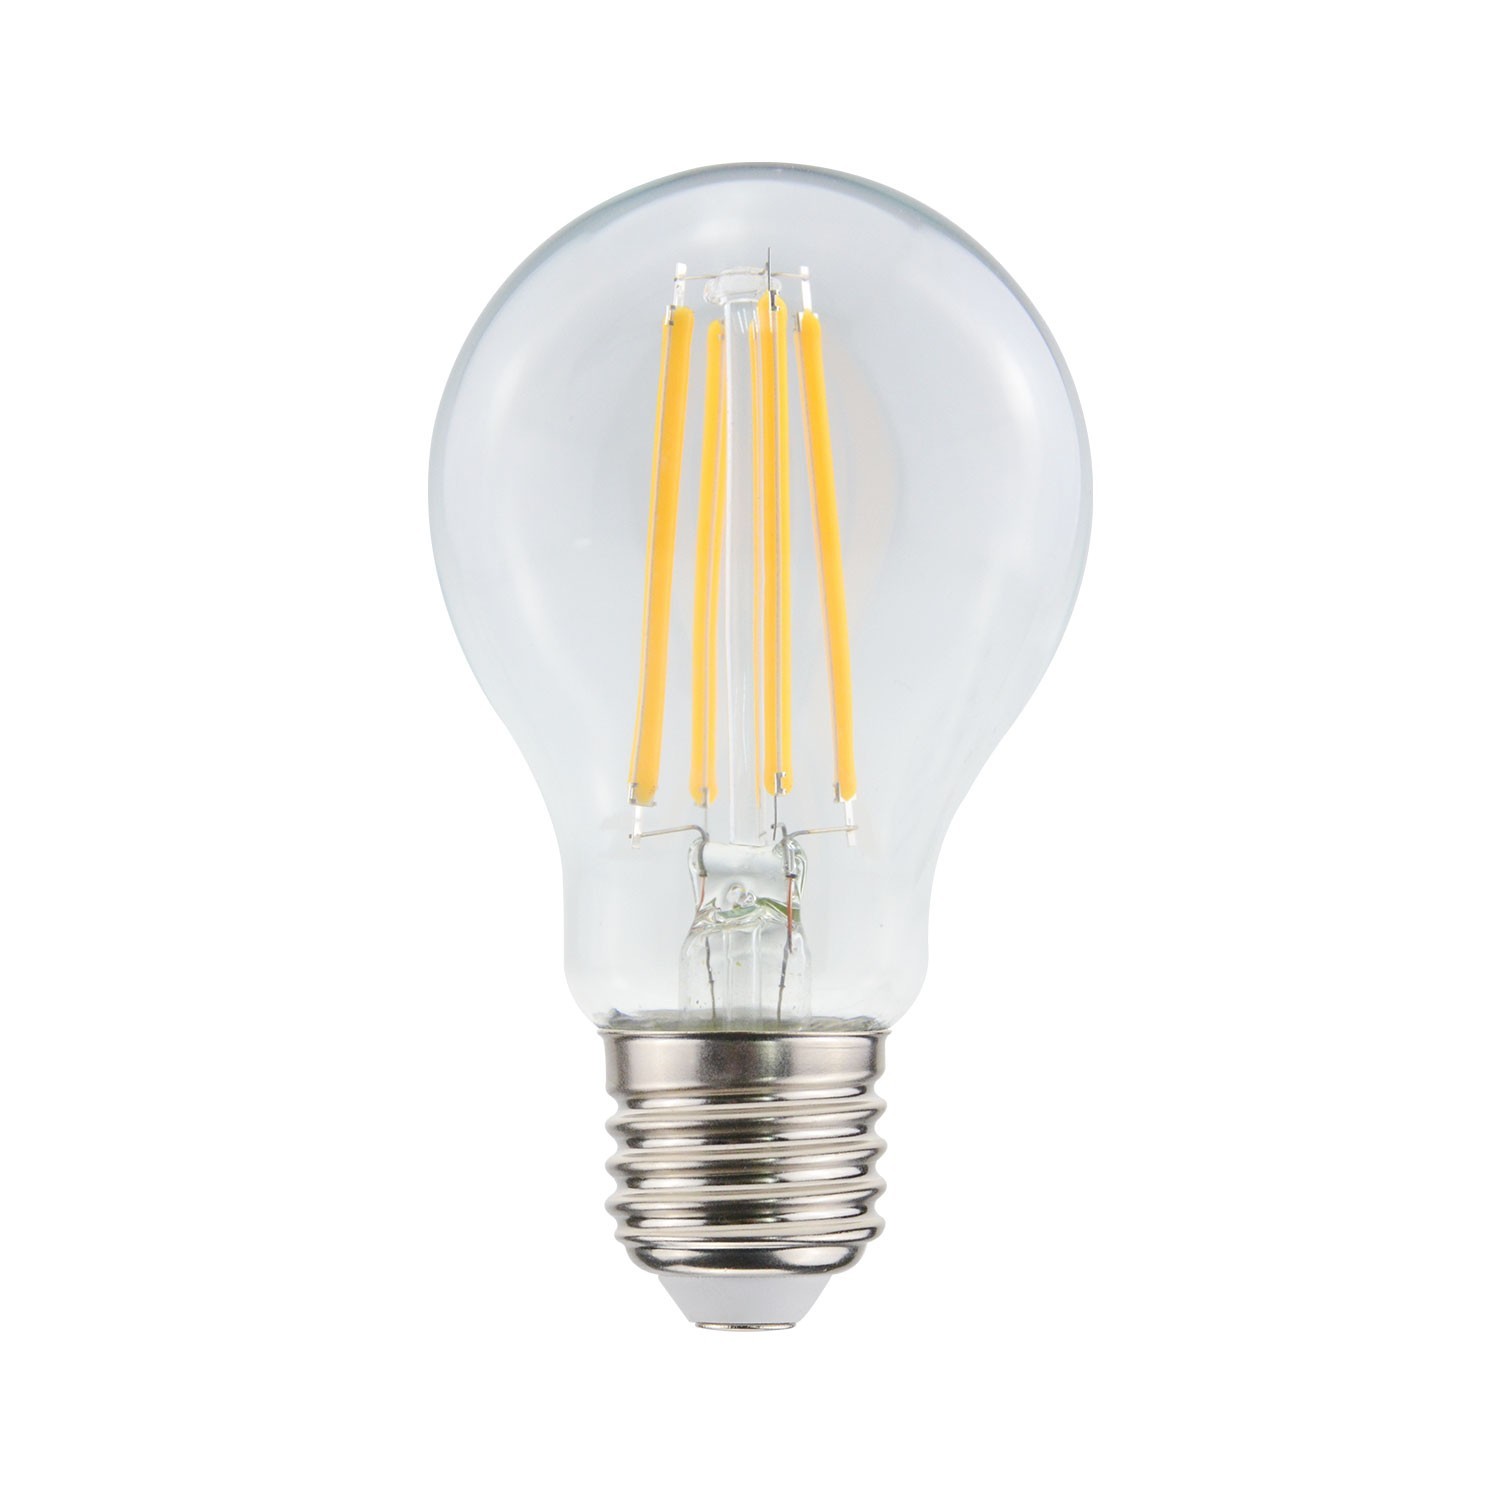 escalate amplitude Distribute LED Drop Transparent 11W E27 2700K Bulb